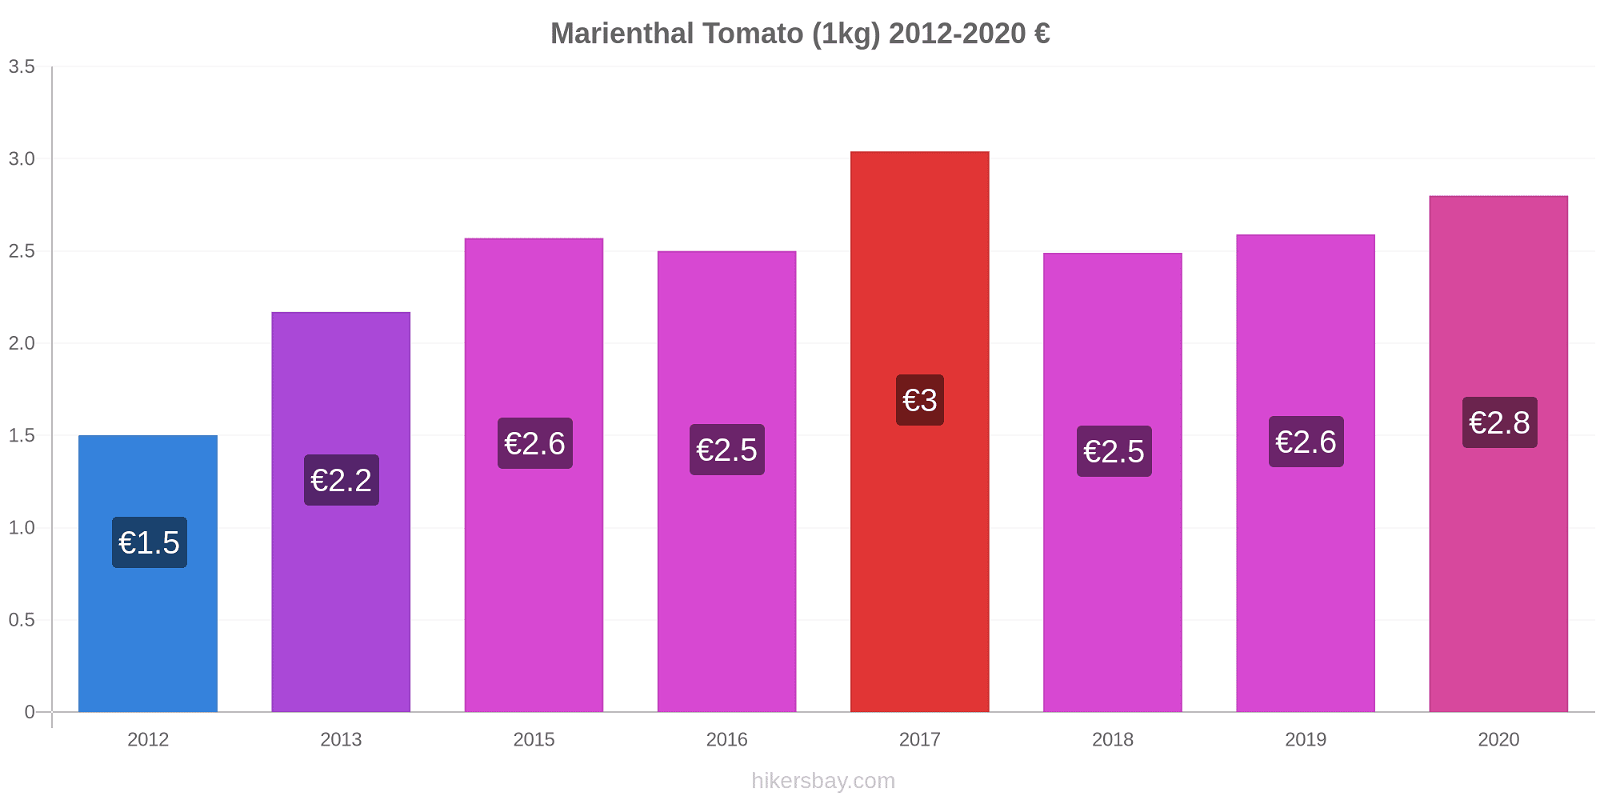 Marienthal price changes Tomato (1kg) hikersbay.com